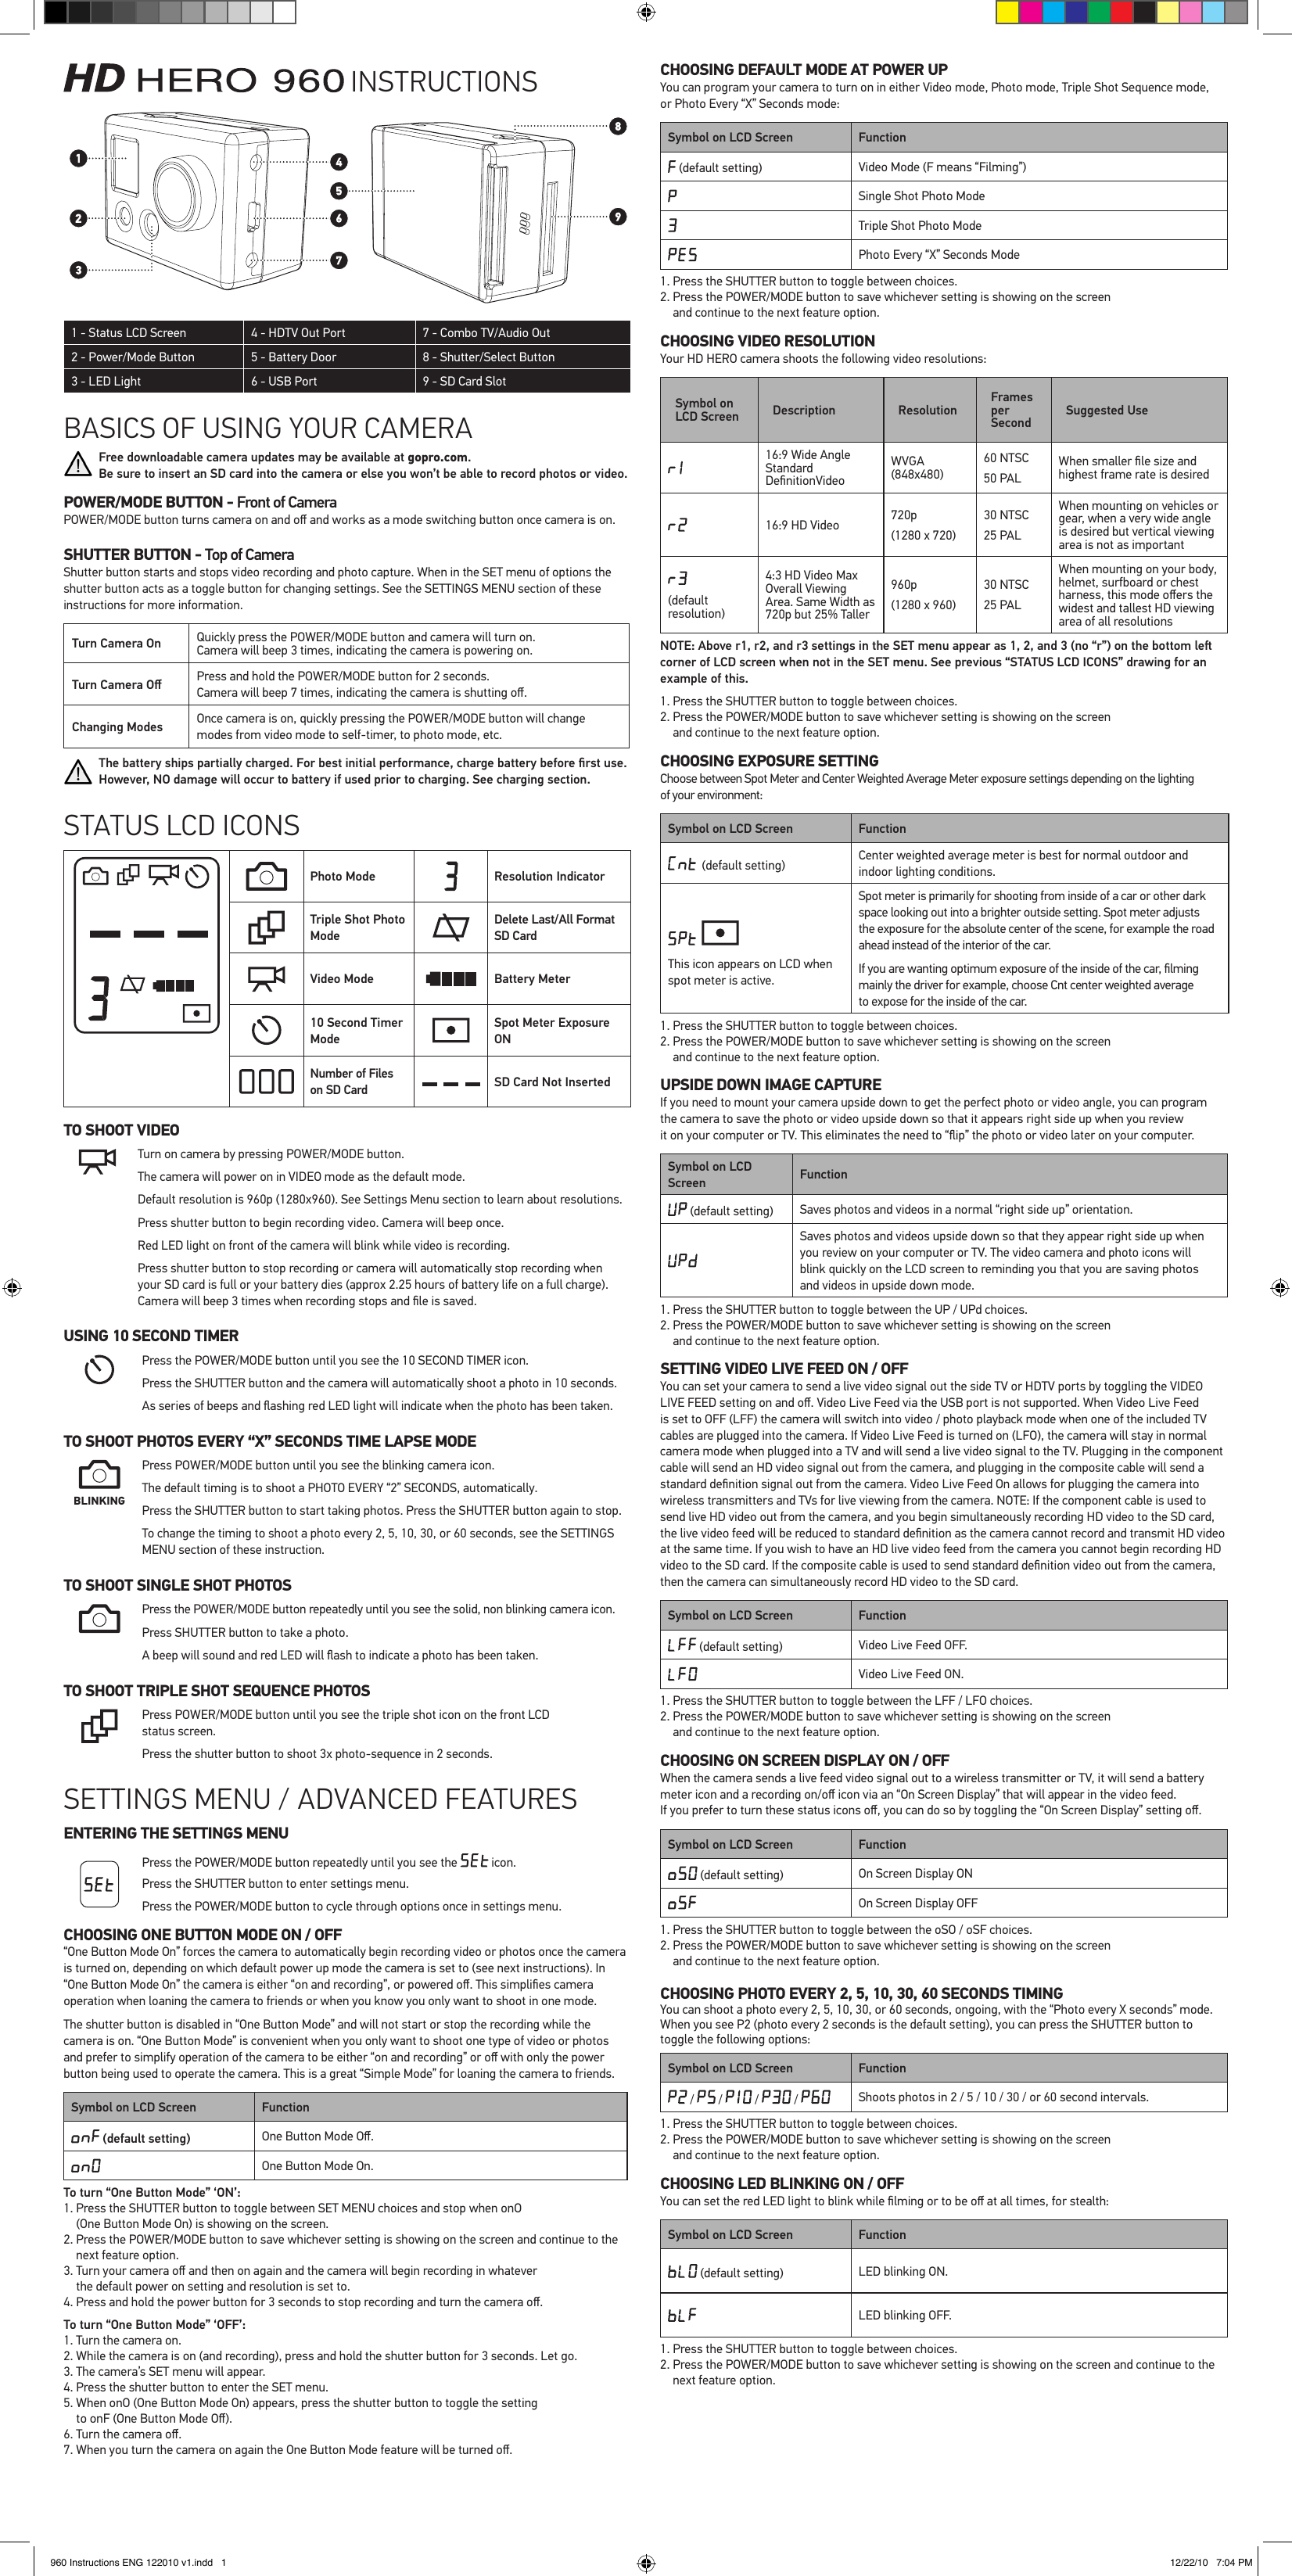 Page 1 of 2 - Gopro Gopro-Gopro-Hd-Hero-960-Users-Manual-  Gopro-gopro-hd-hero-960-users-manual